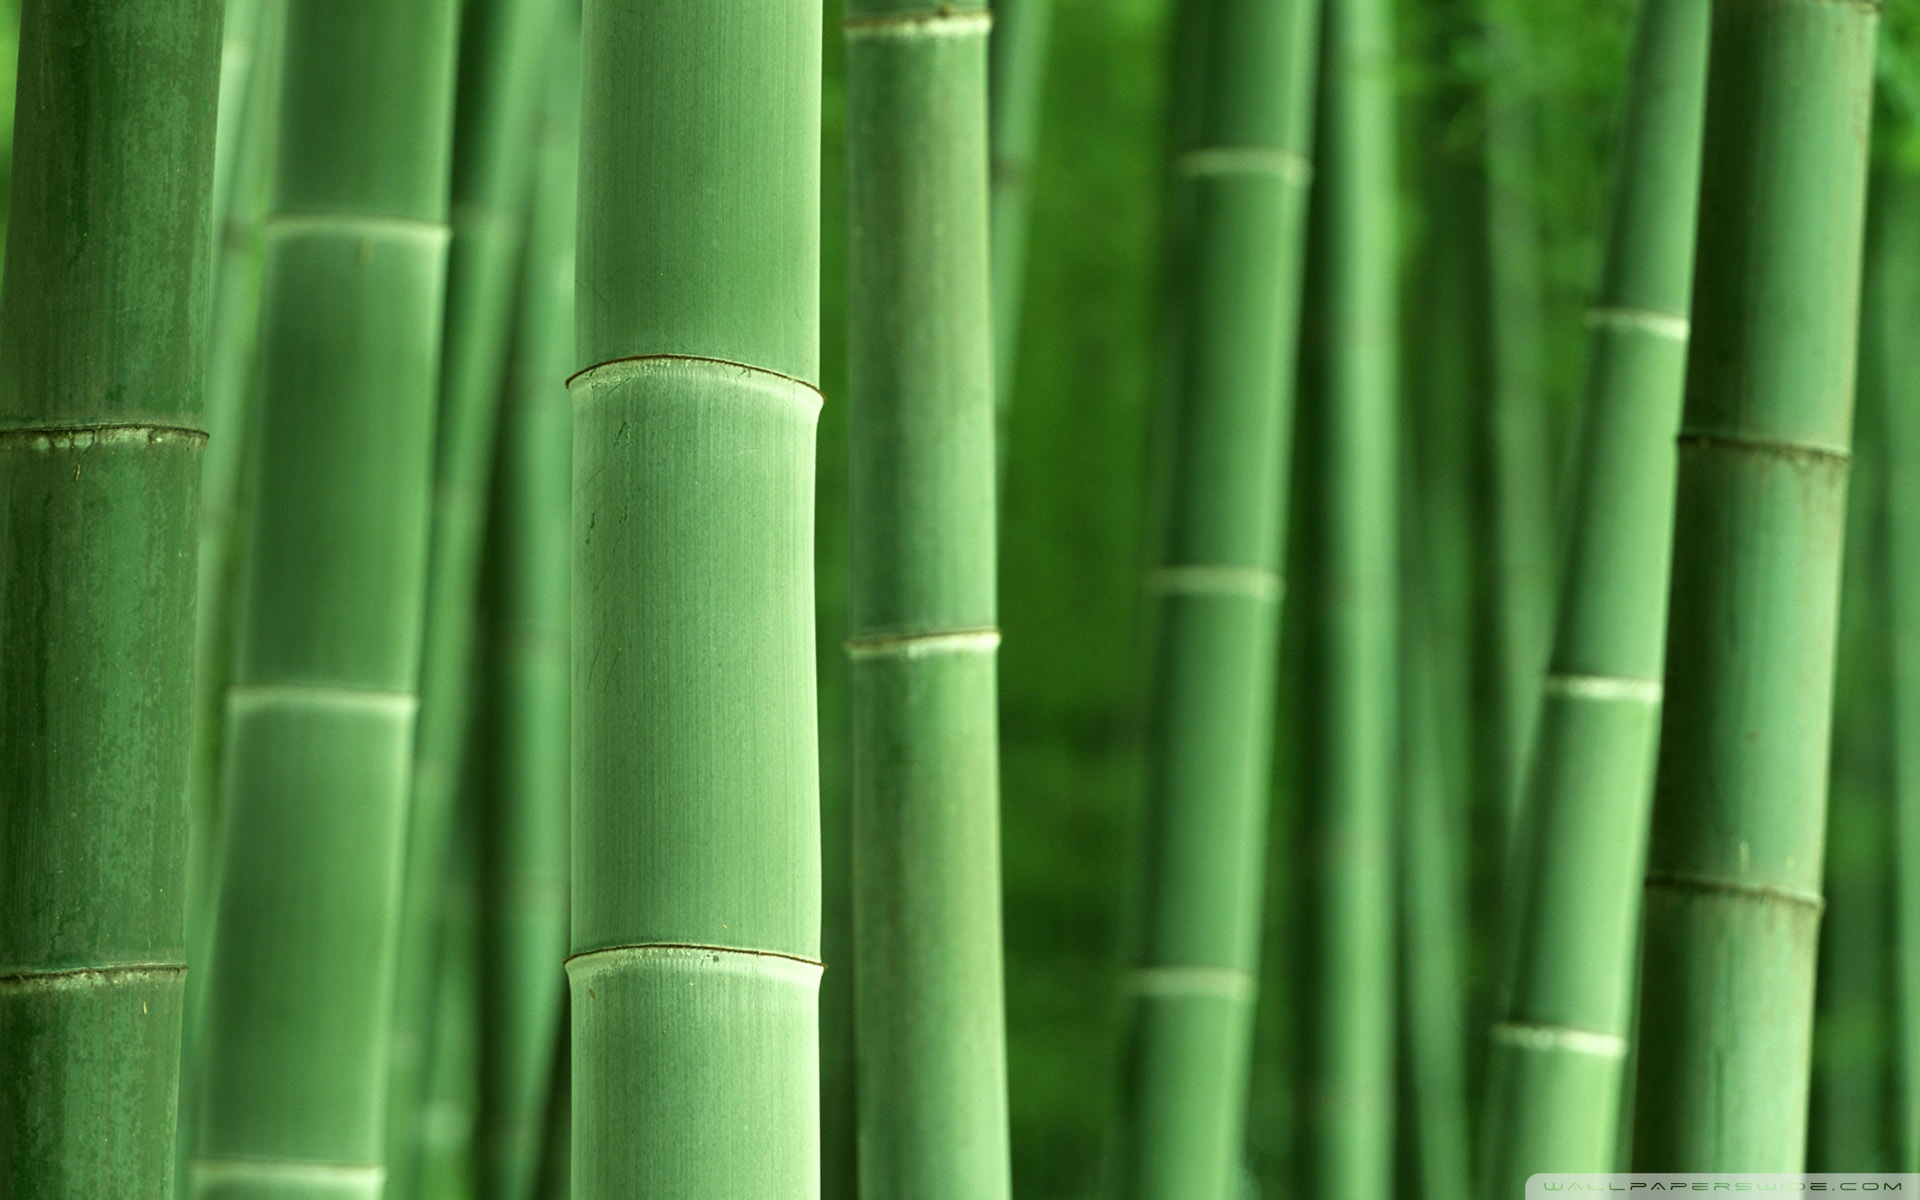 Green bamboo photo